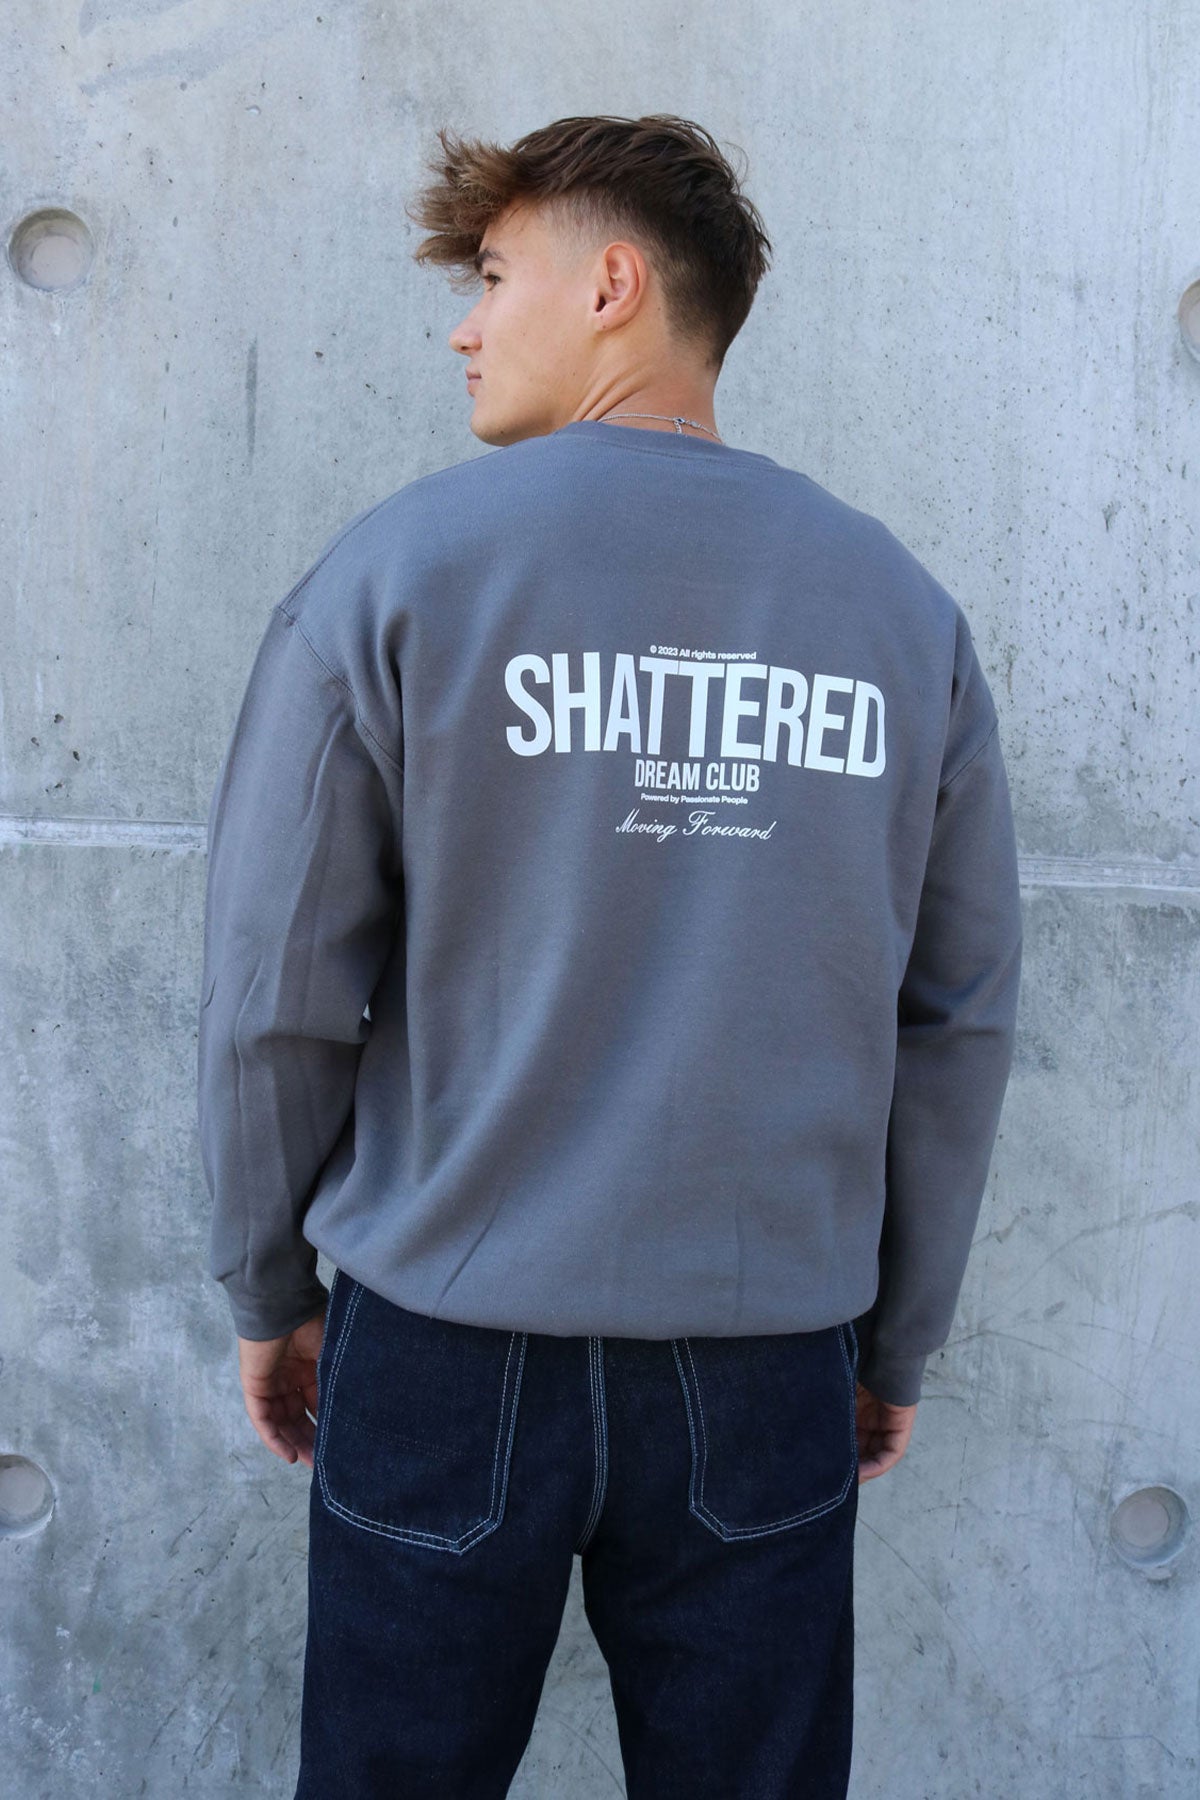 Shattered Dreams Club Sweatshirt